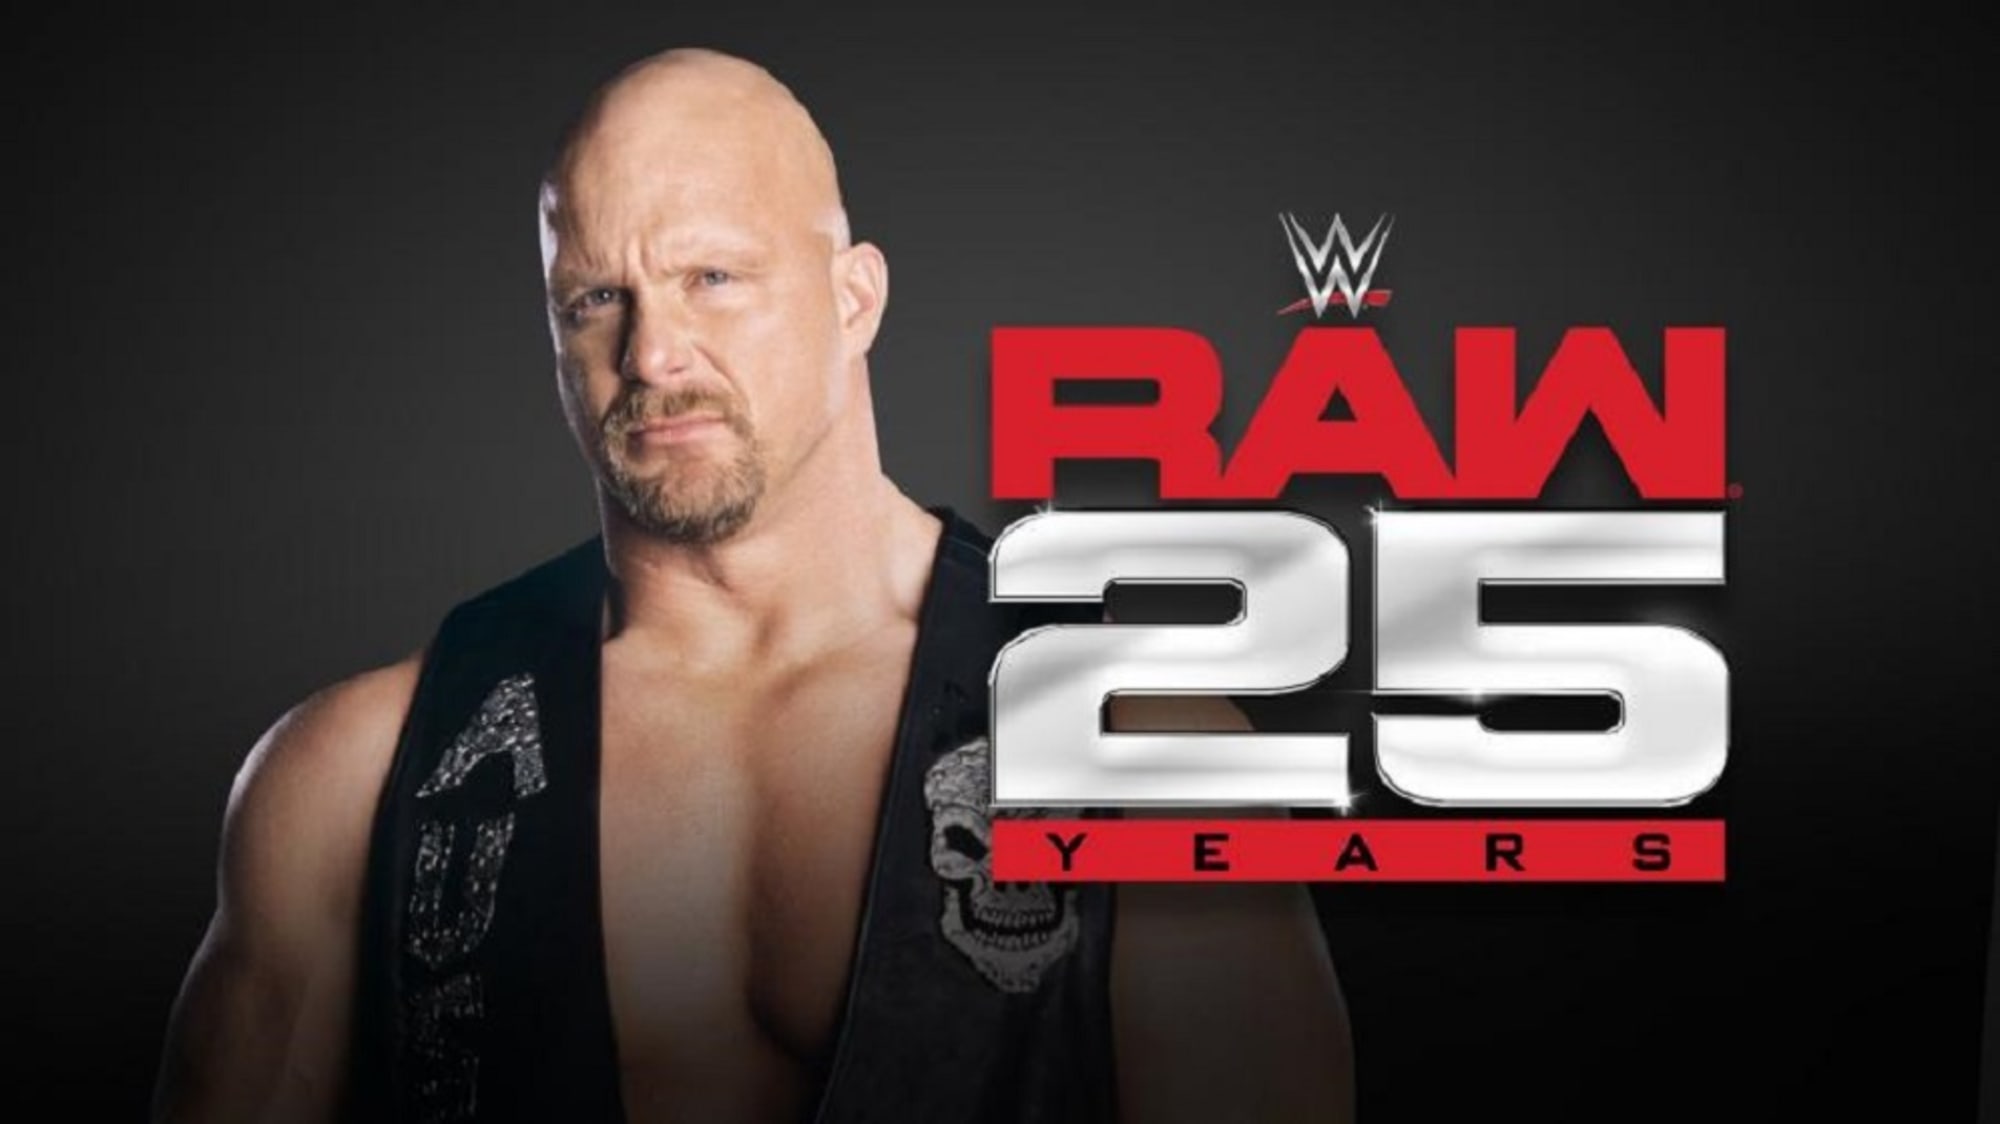 WWE Raw 25 Complete list of confirmed legends, superstars